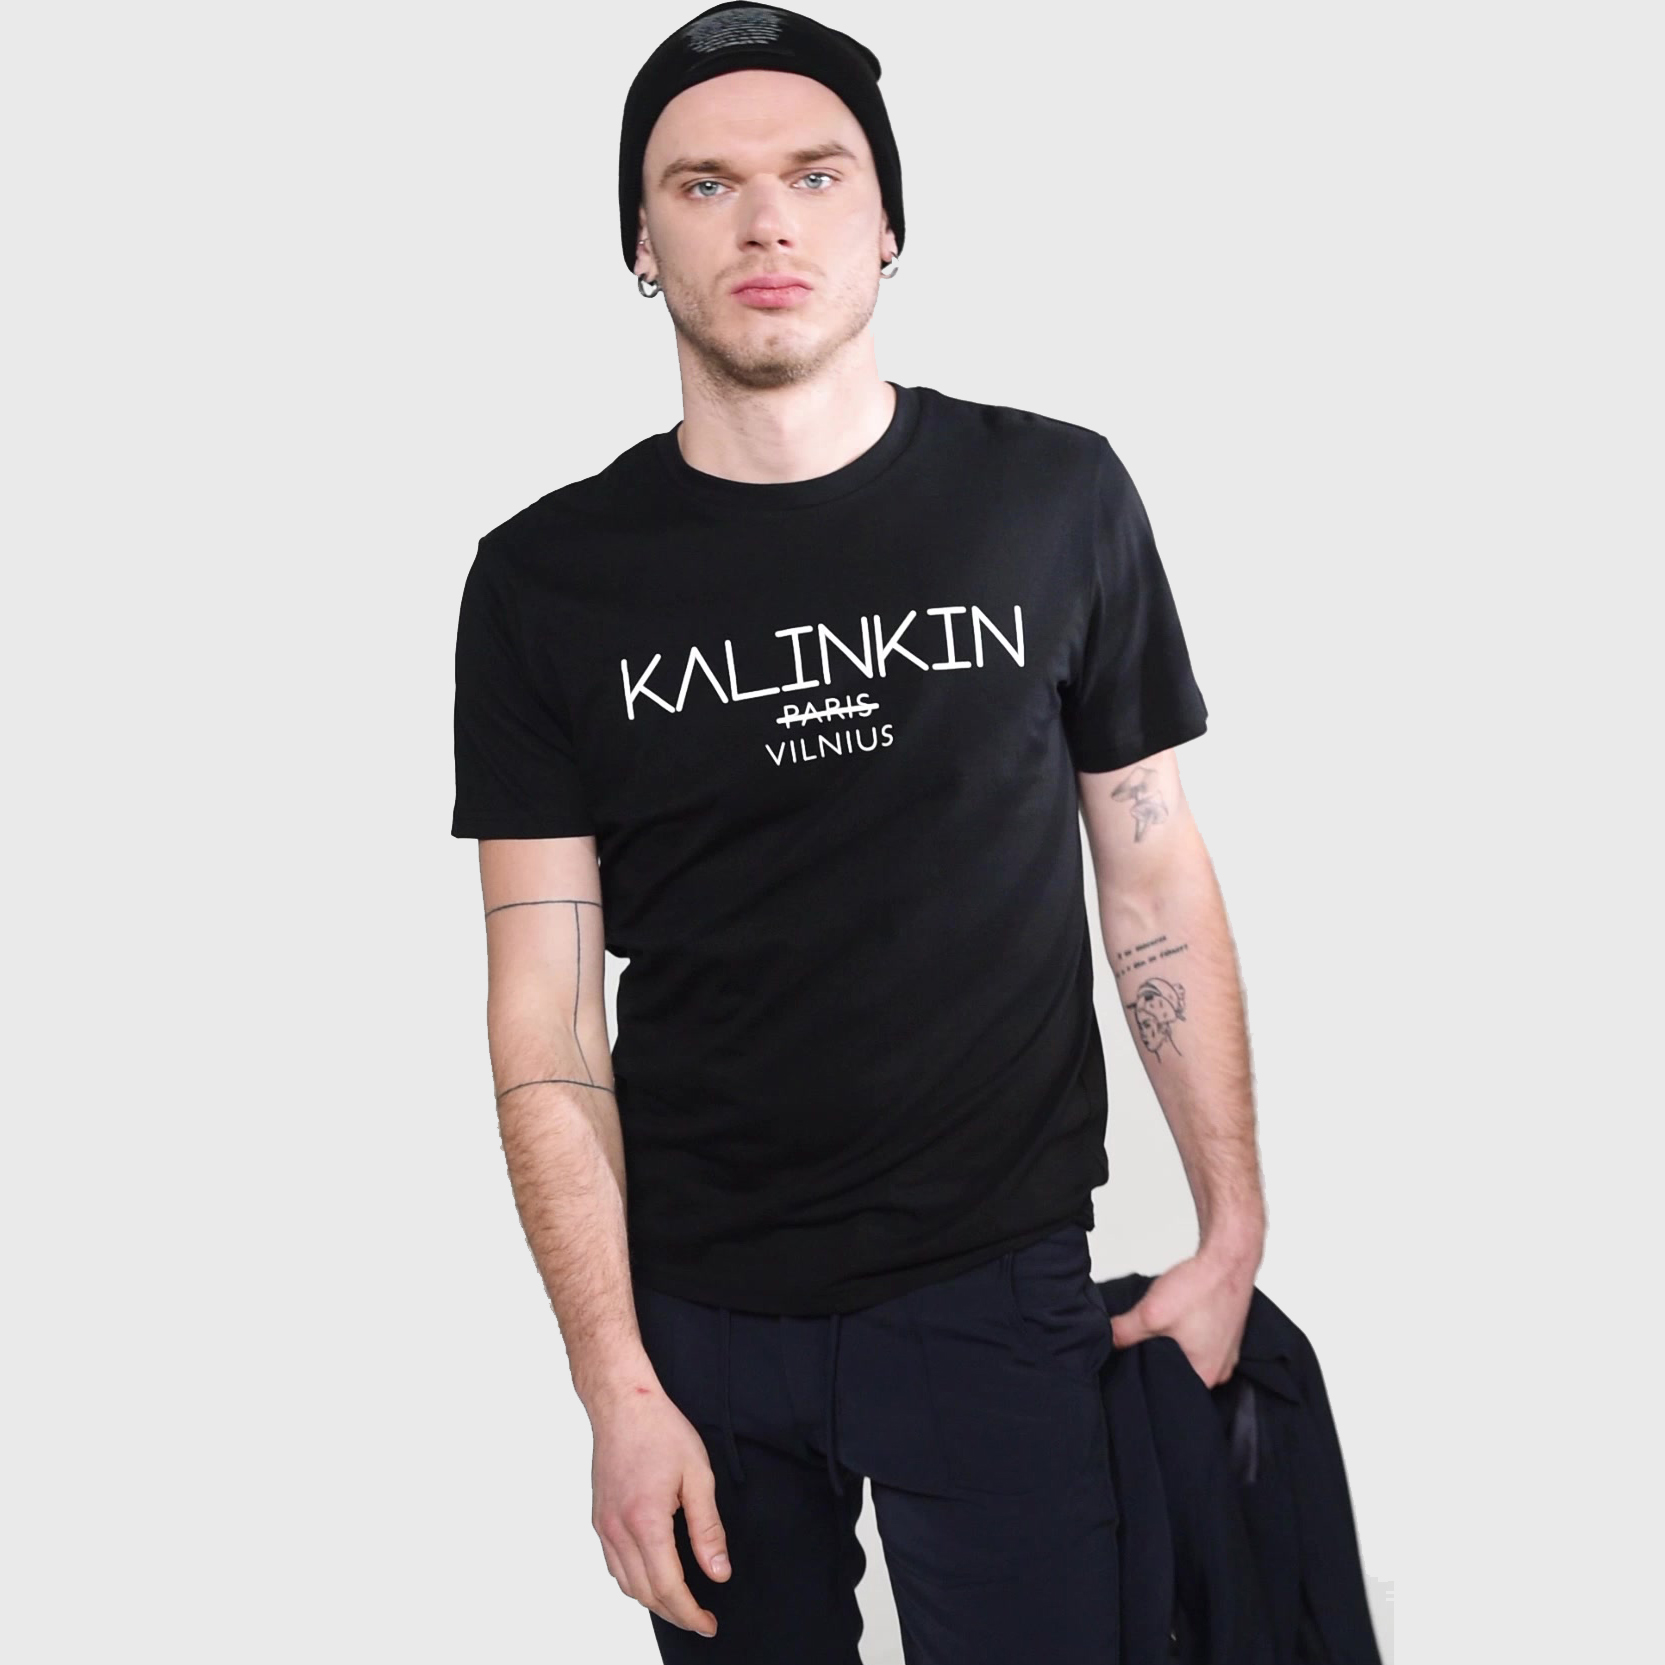 KALINKIN VILNIUS T-shirt black, UNISEX